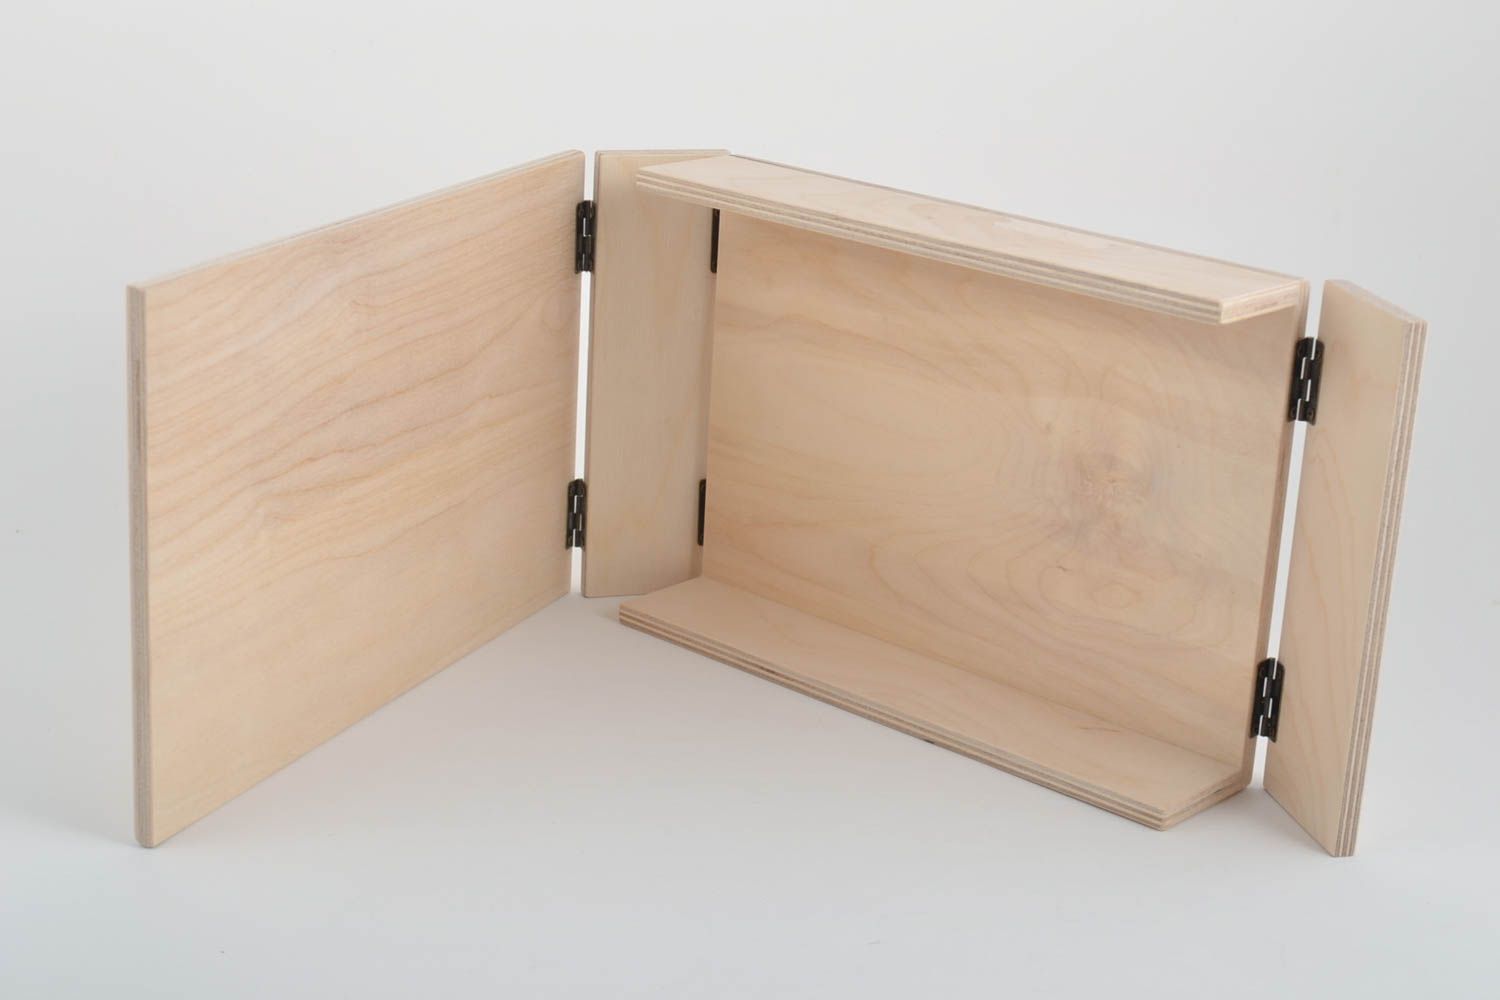 Unusual handmade diy wooden blank box decoupage ideas creative work ideas photo 3